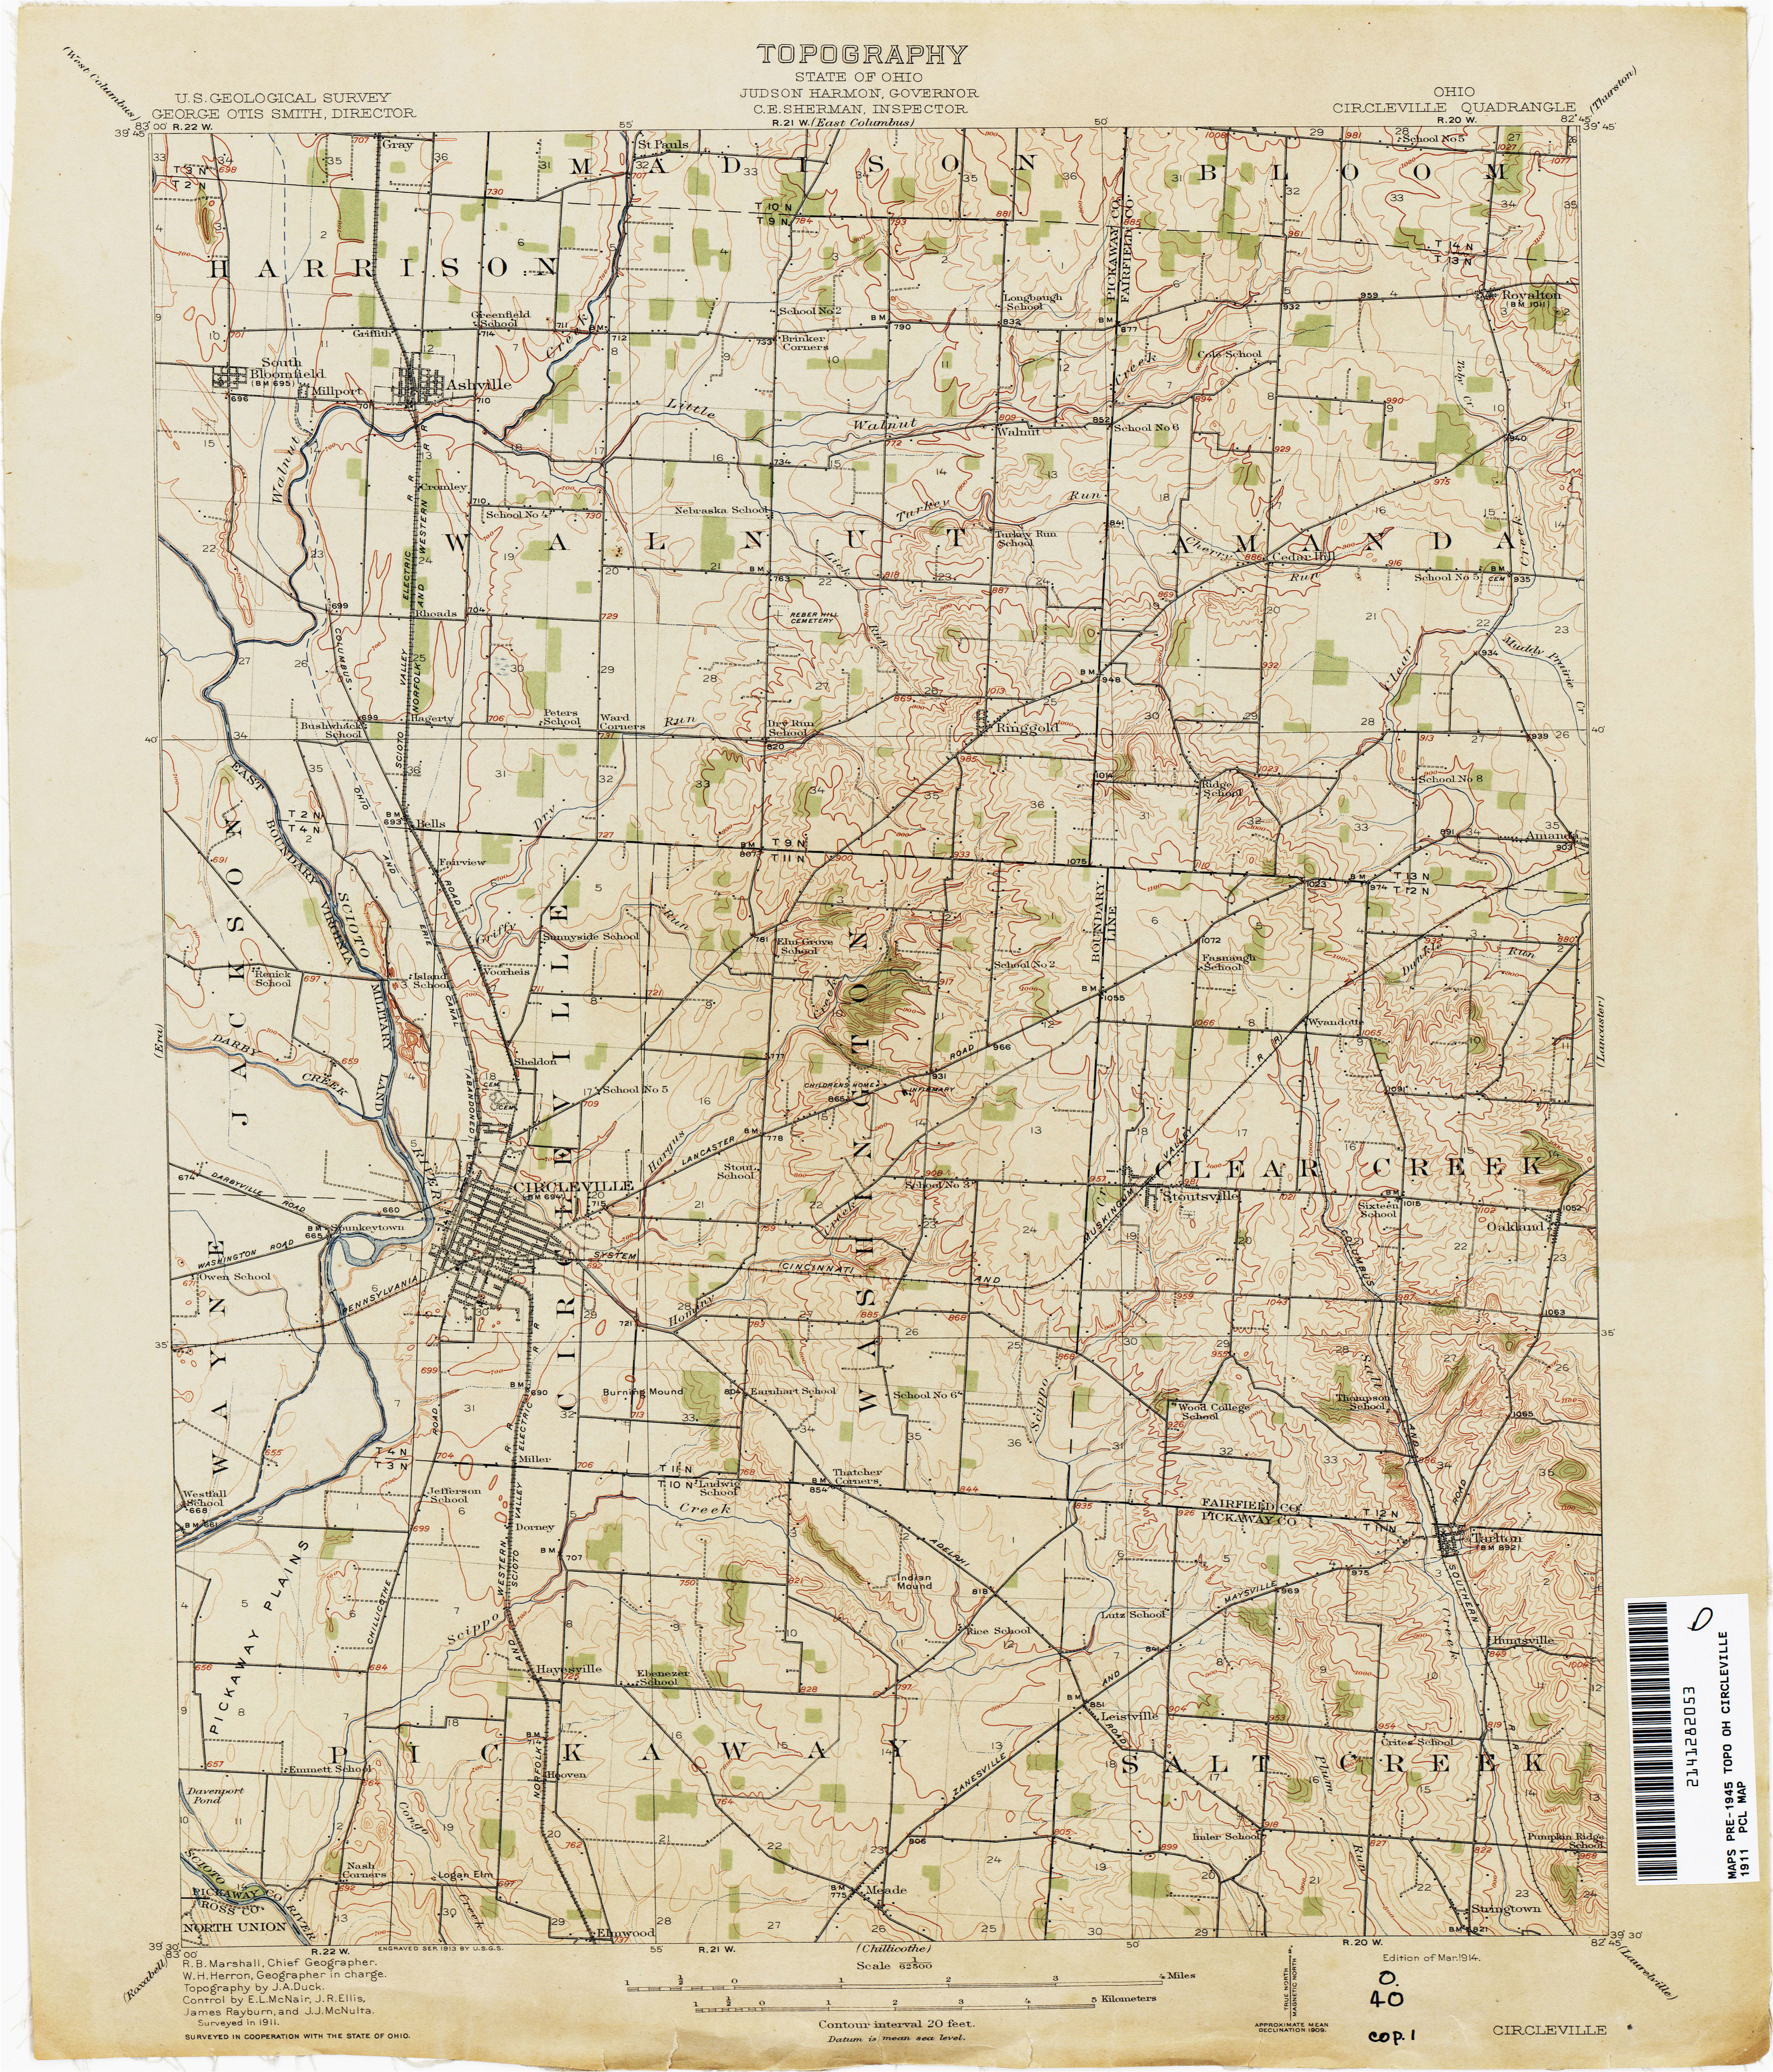 map of clark county ohio ohio historical topographic maps perry